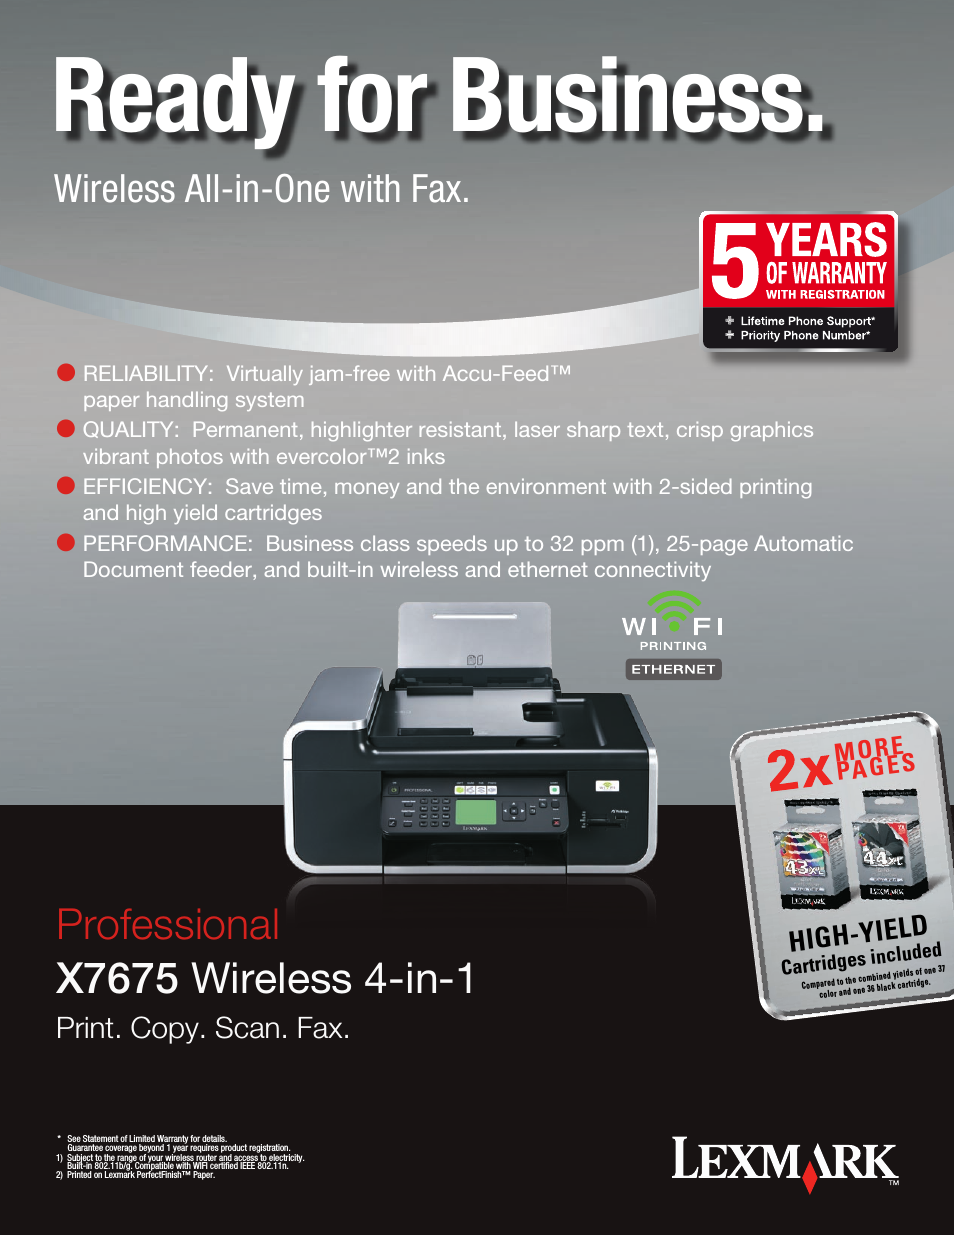 Professional Wireless 4-in-1 X7675